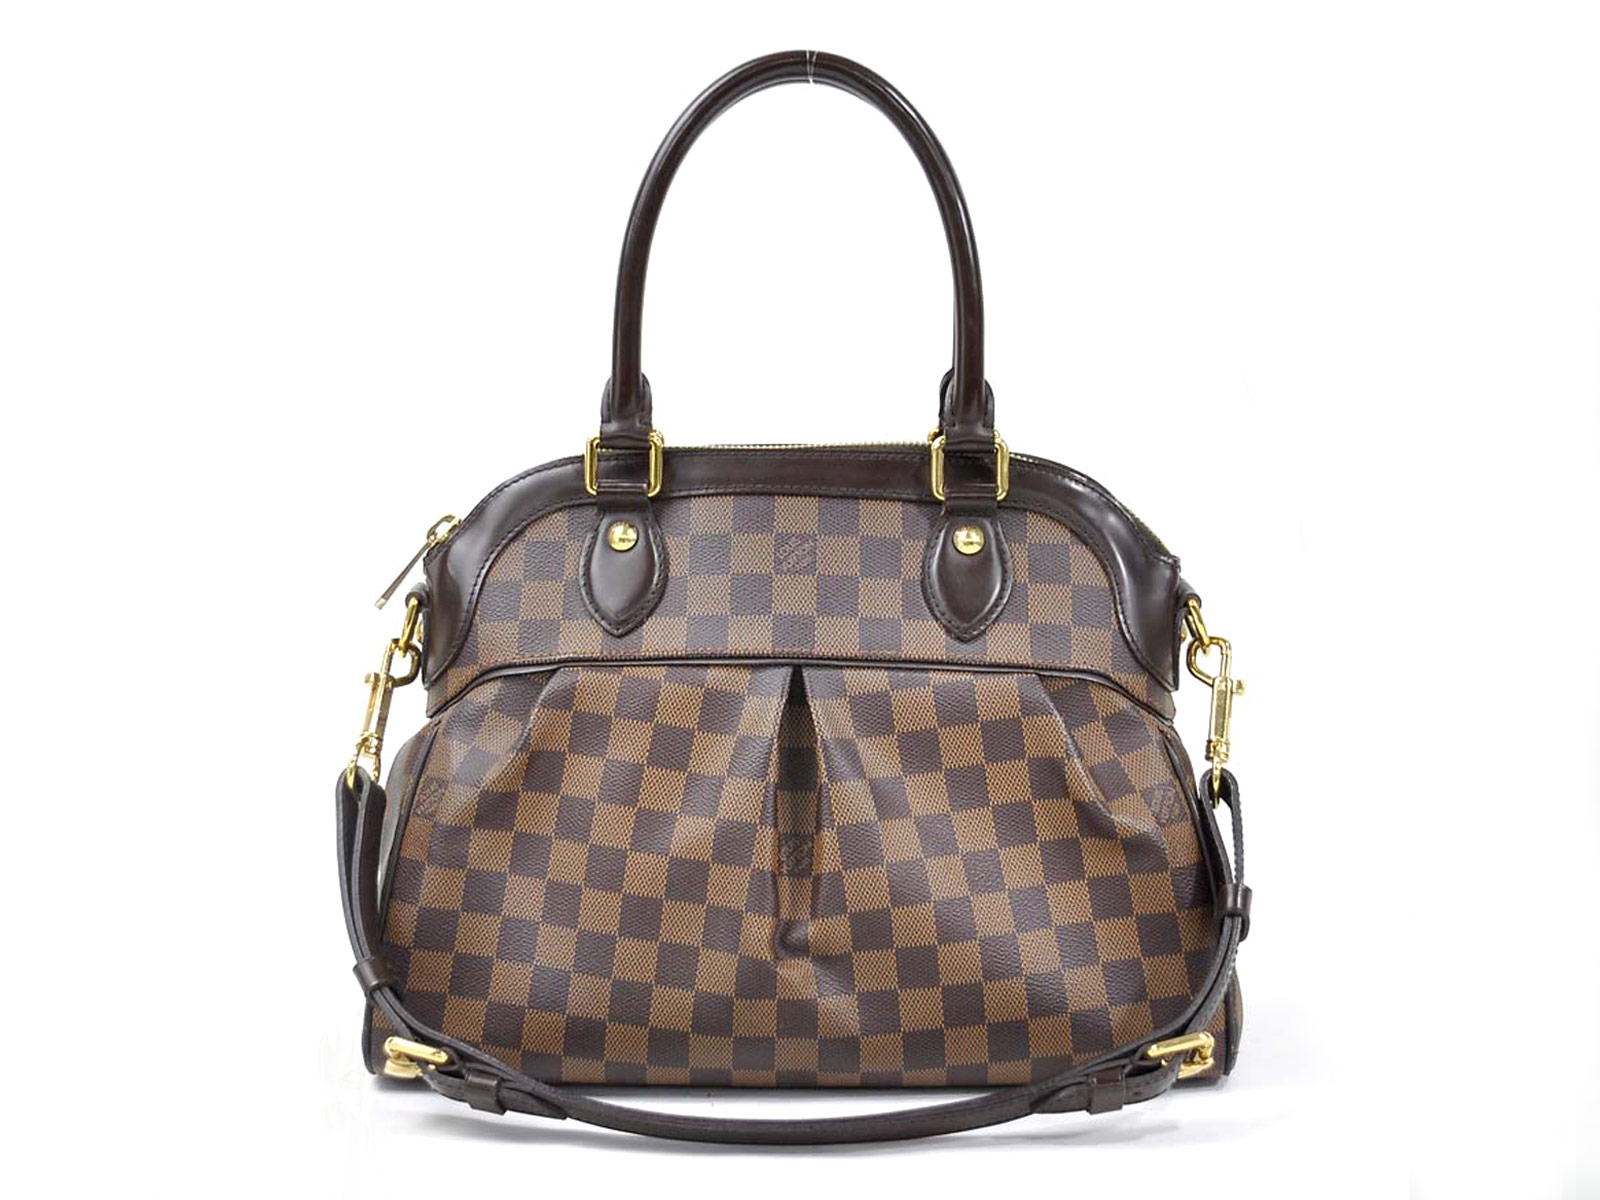 Auth Louis Vuitton Damier Ebene Trevi PM Handbag Shoulder Bag N51997 - 98084a | eBay